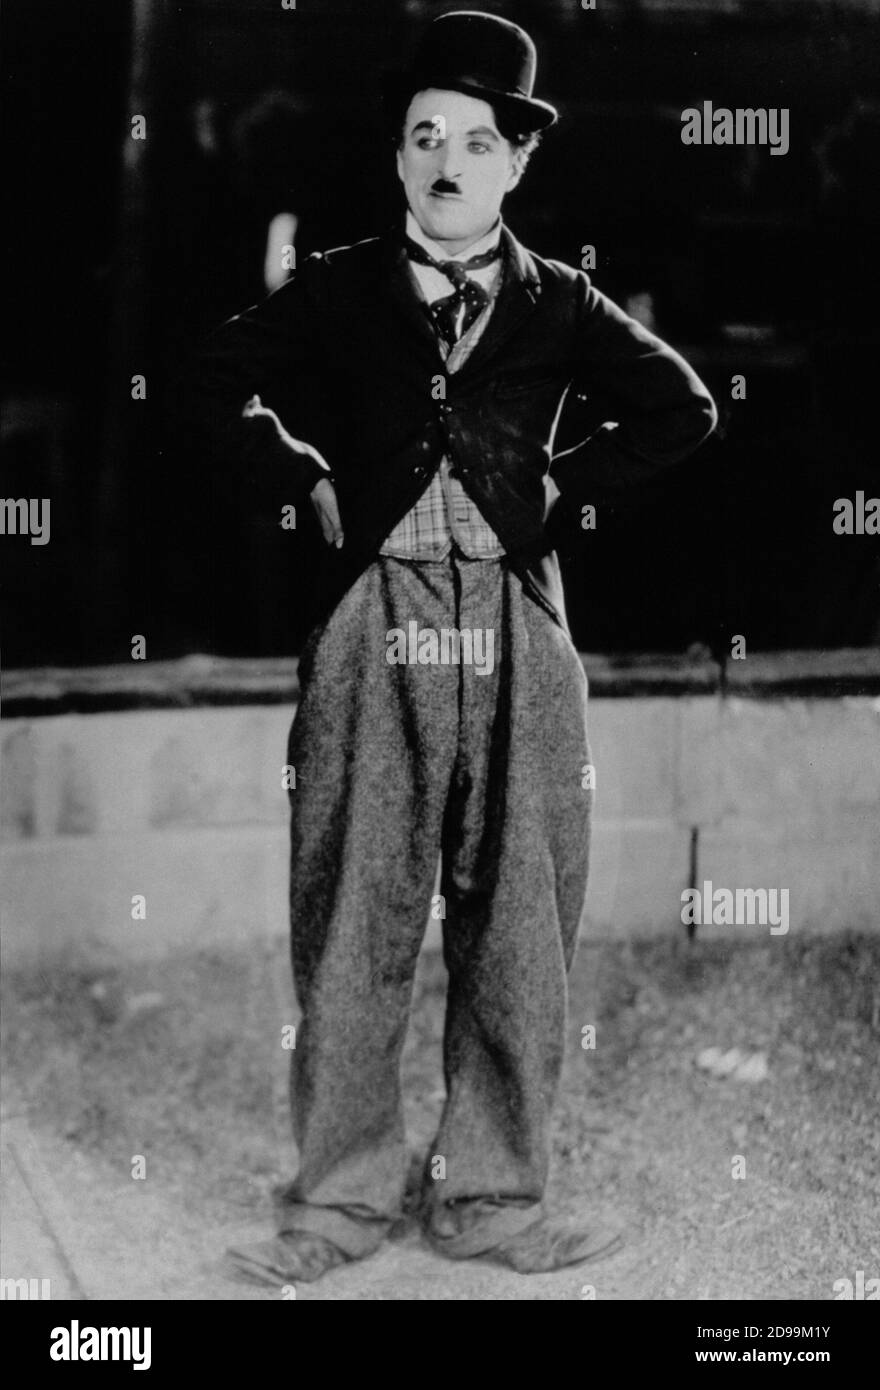 CHARLES CHAPLIN als Charlot im ZIRKUS ( 1928 - Il circo ) - Kino muto - Stummfilm - Baffi - Schnurrbärte ---- Archivio GBB Stockfoto